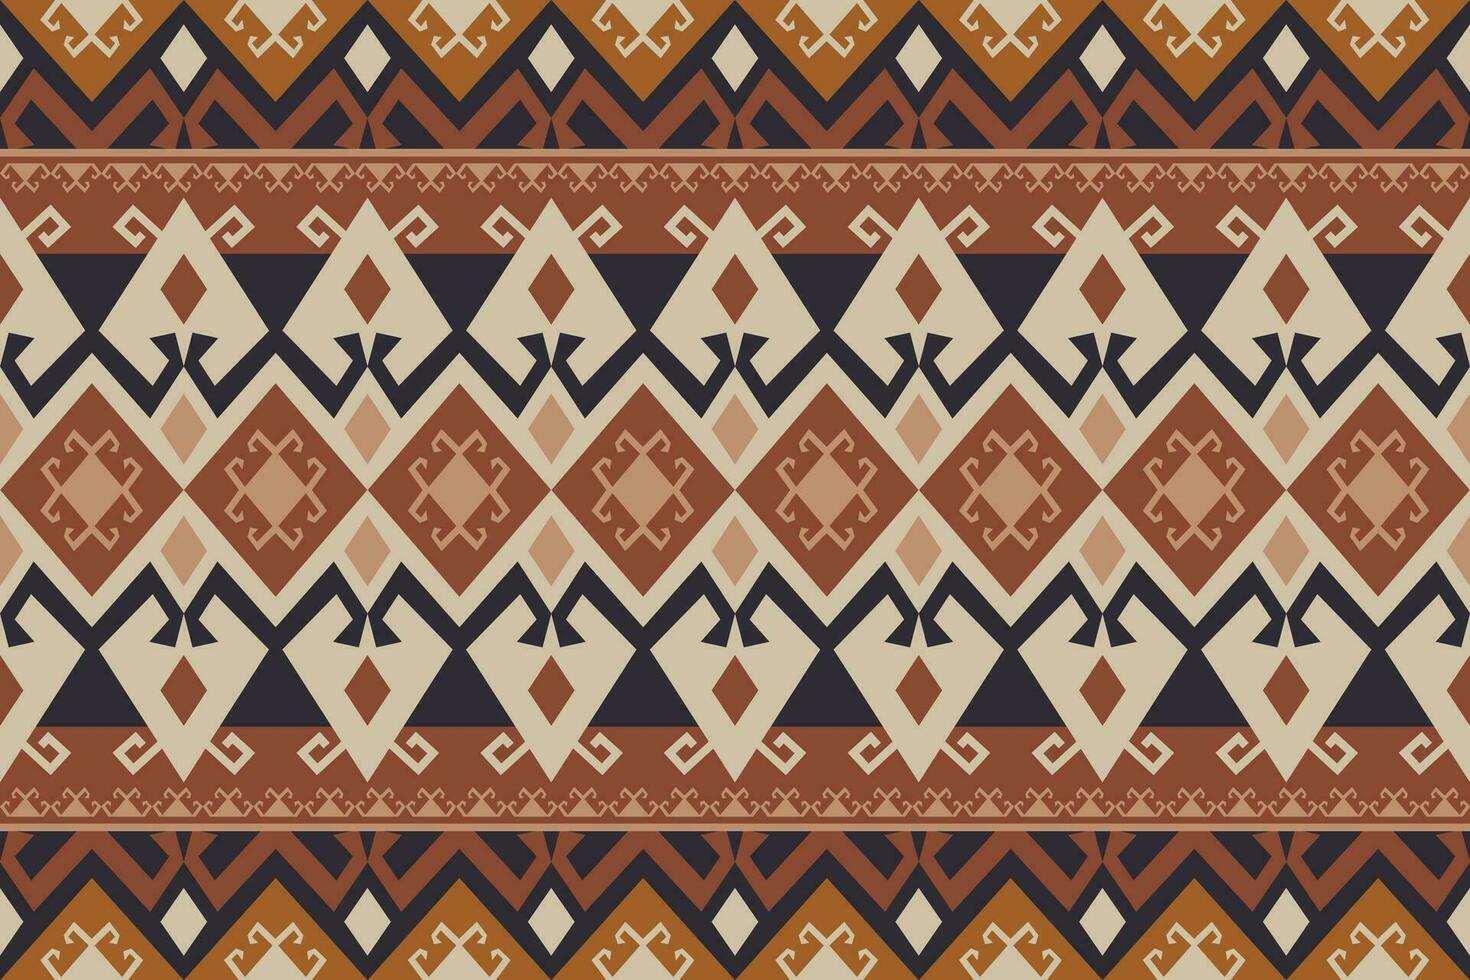 Aztec Kilim geometric pattern. Aztec tribal geometric shape seamless pattern vintage style. Ethnic geometric pattern use for fabric, textile border, carpet, cushion, wallpaper, upholstery, etc. vector